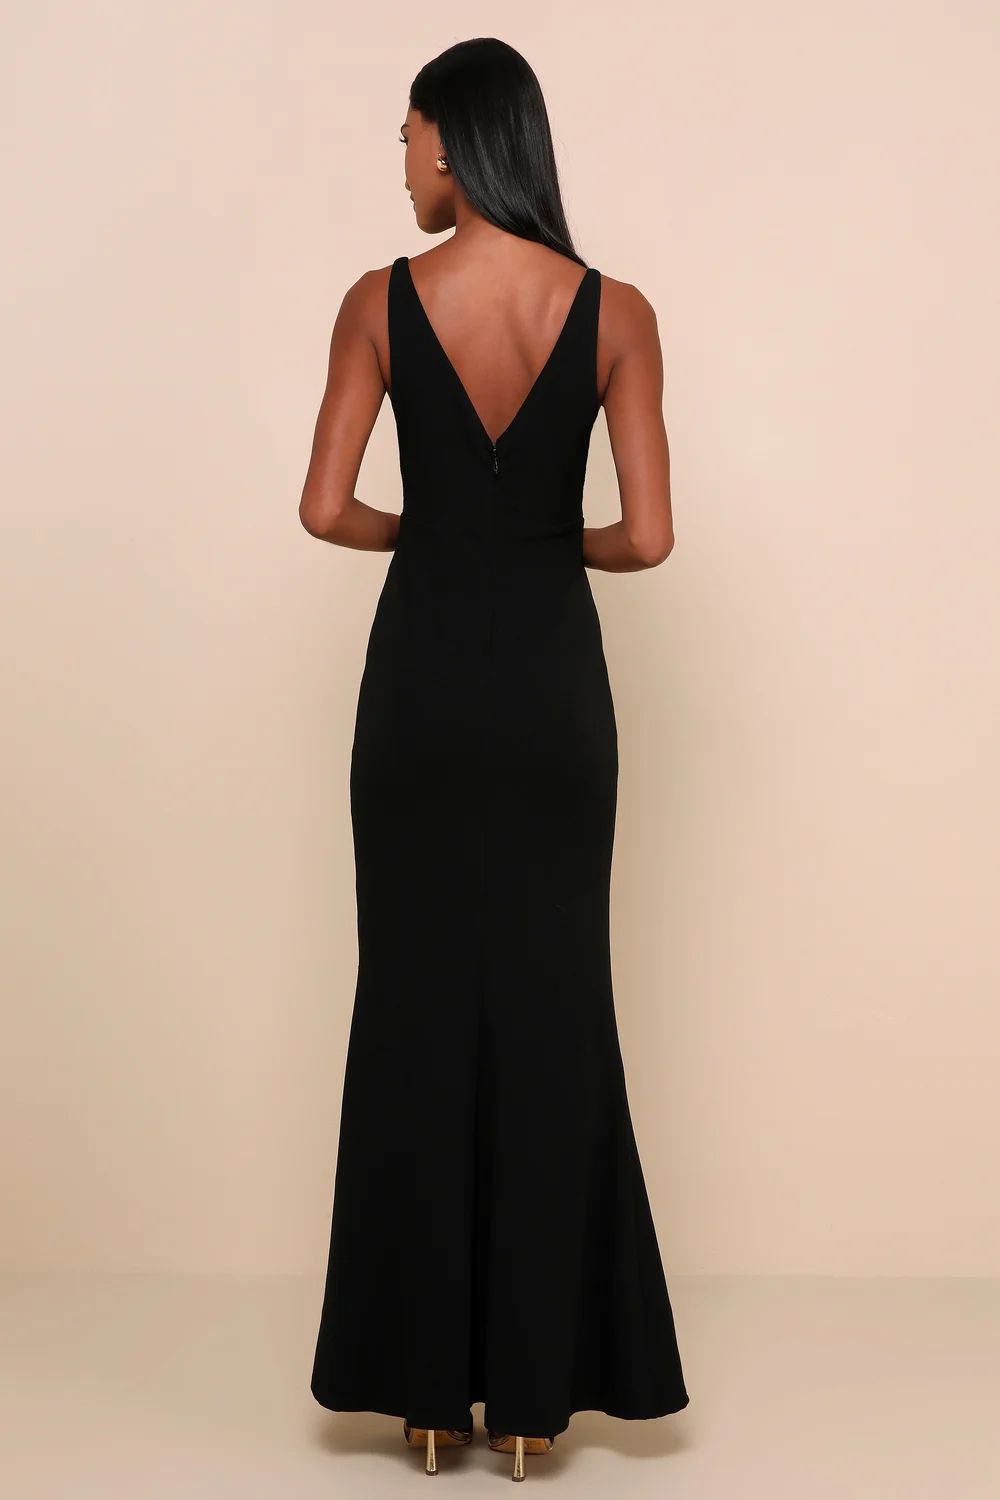 Melora Black Sleeveless Maxi Dress | Lulus